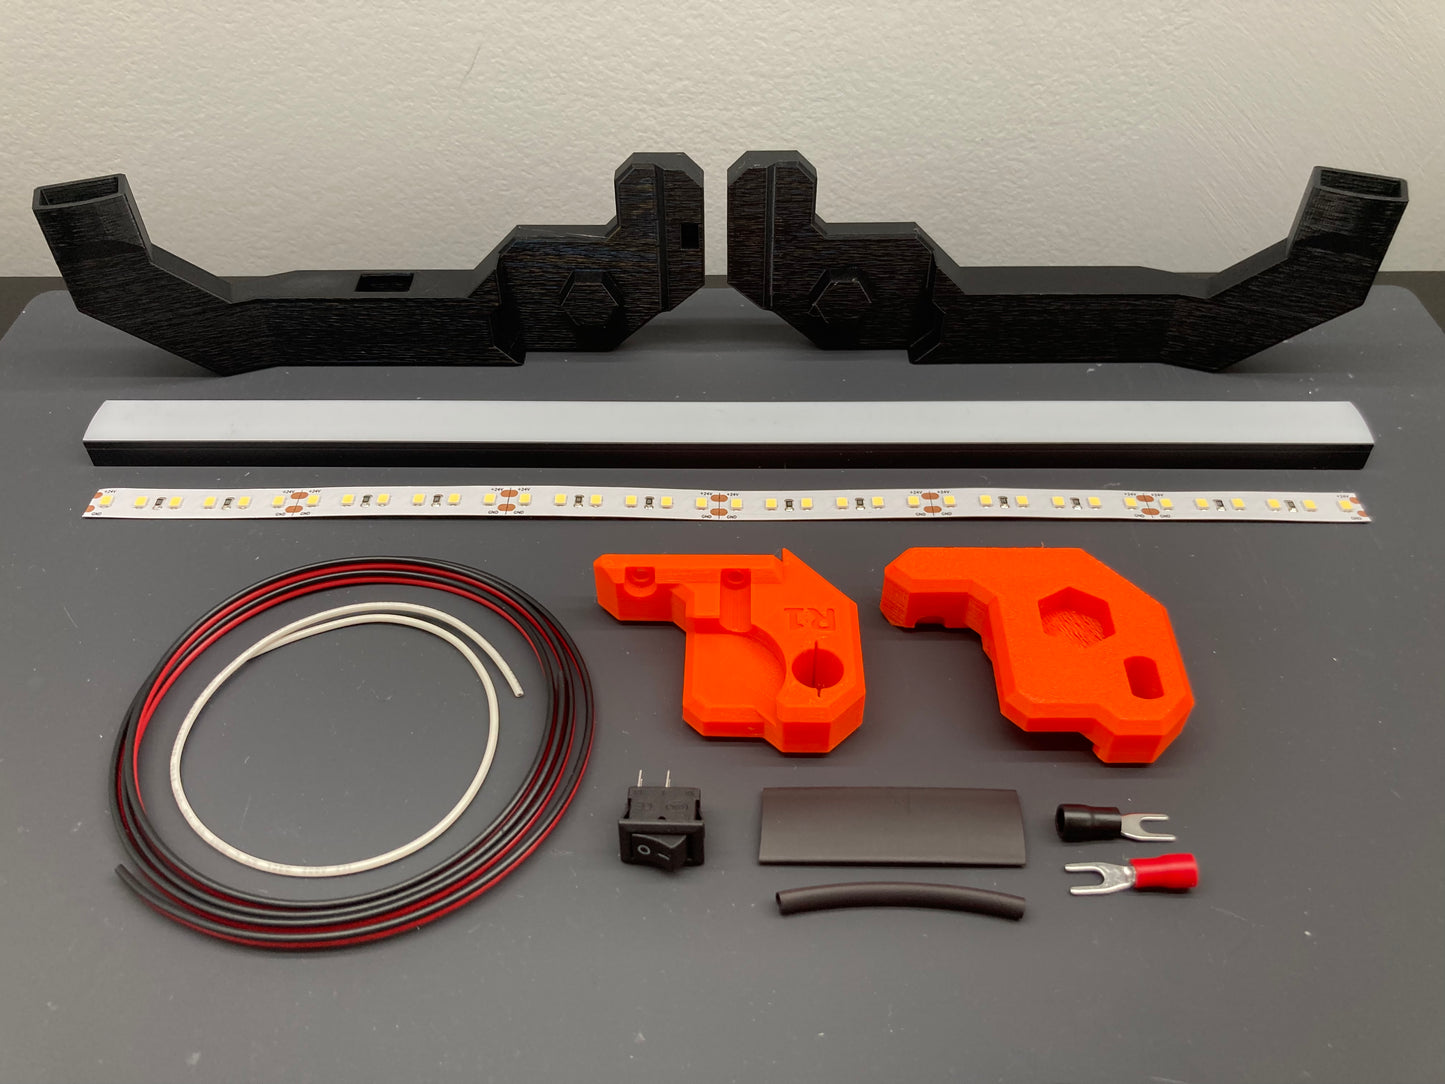 VOXEL Prusa MK4 3D Printer LED Light Bar